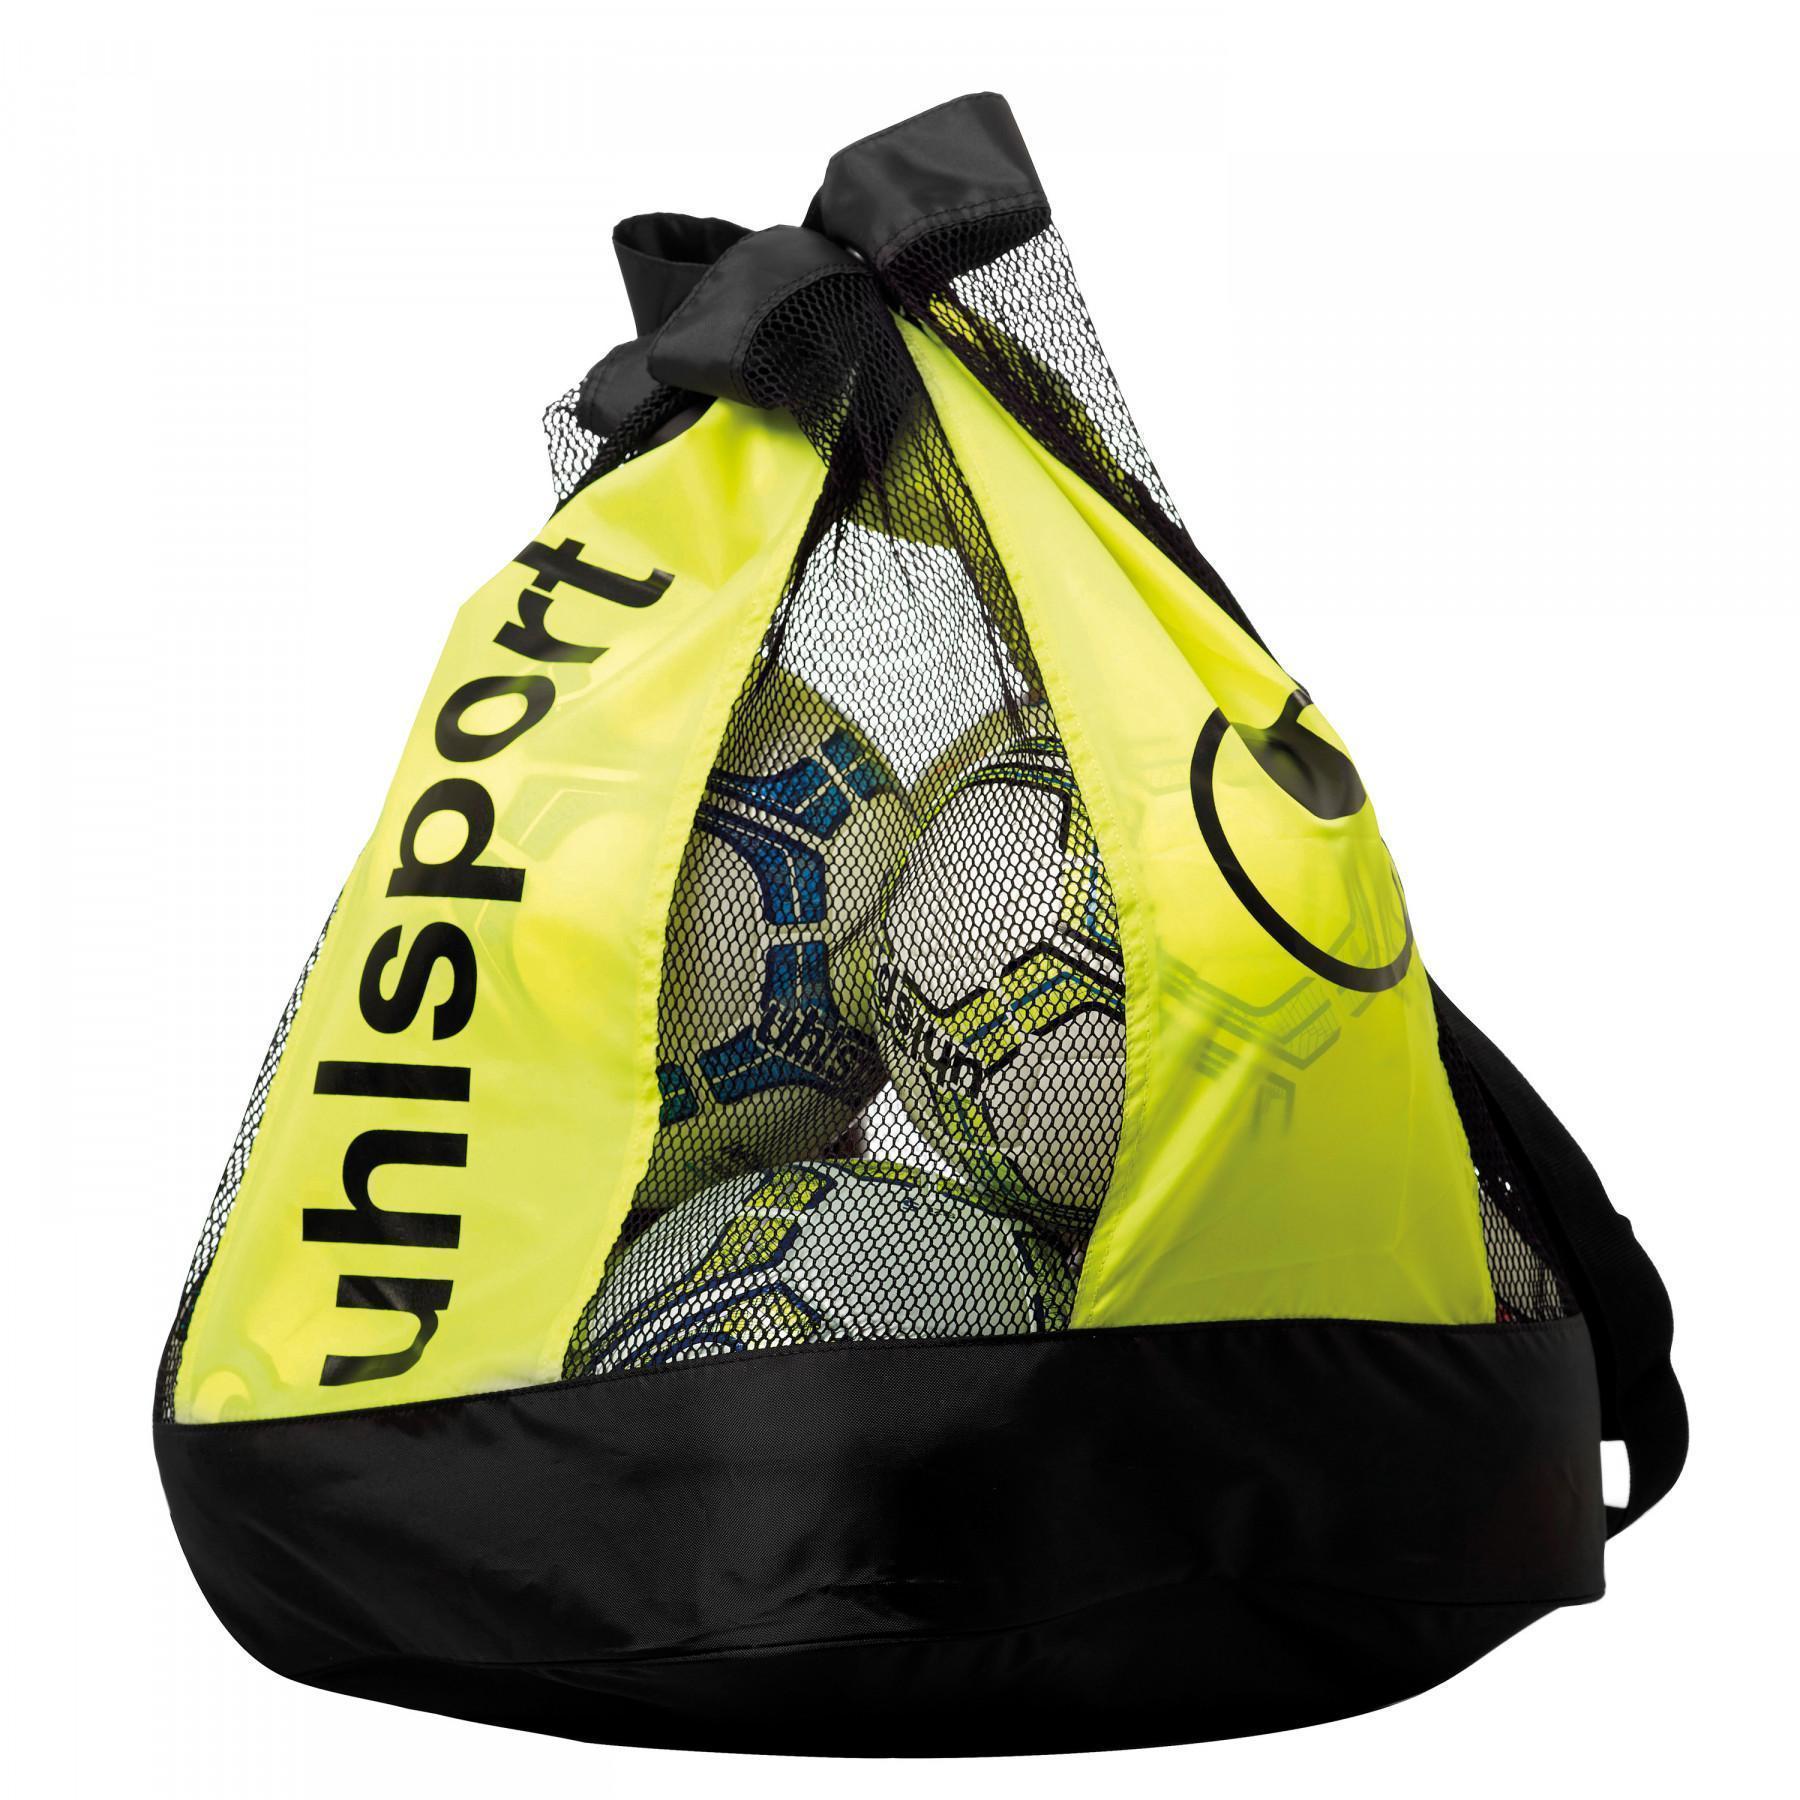 Ball bag Uhlsport (12 Balls)